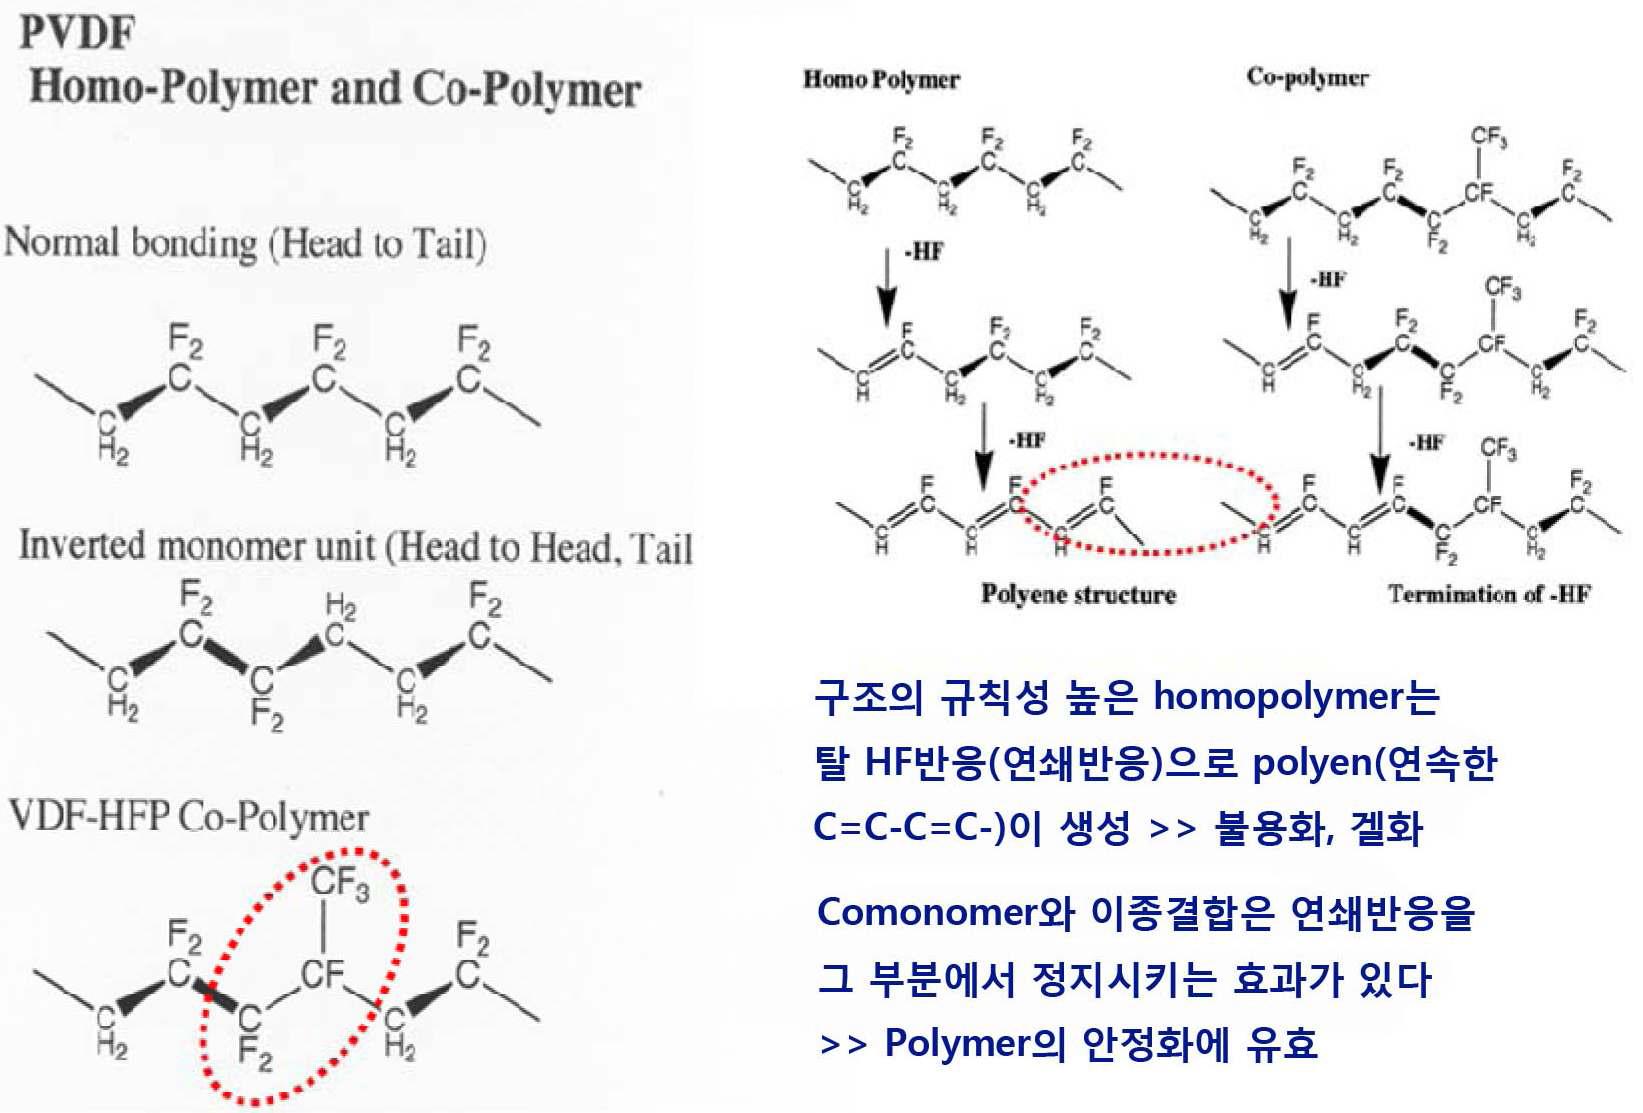 PVDF Homo-polymer, Co-polymer